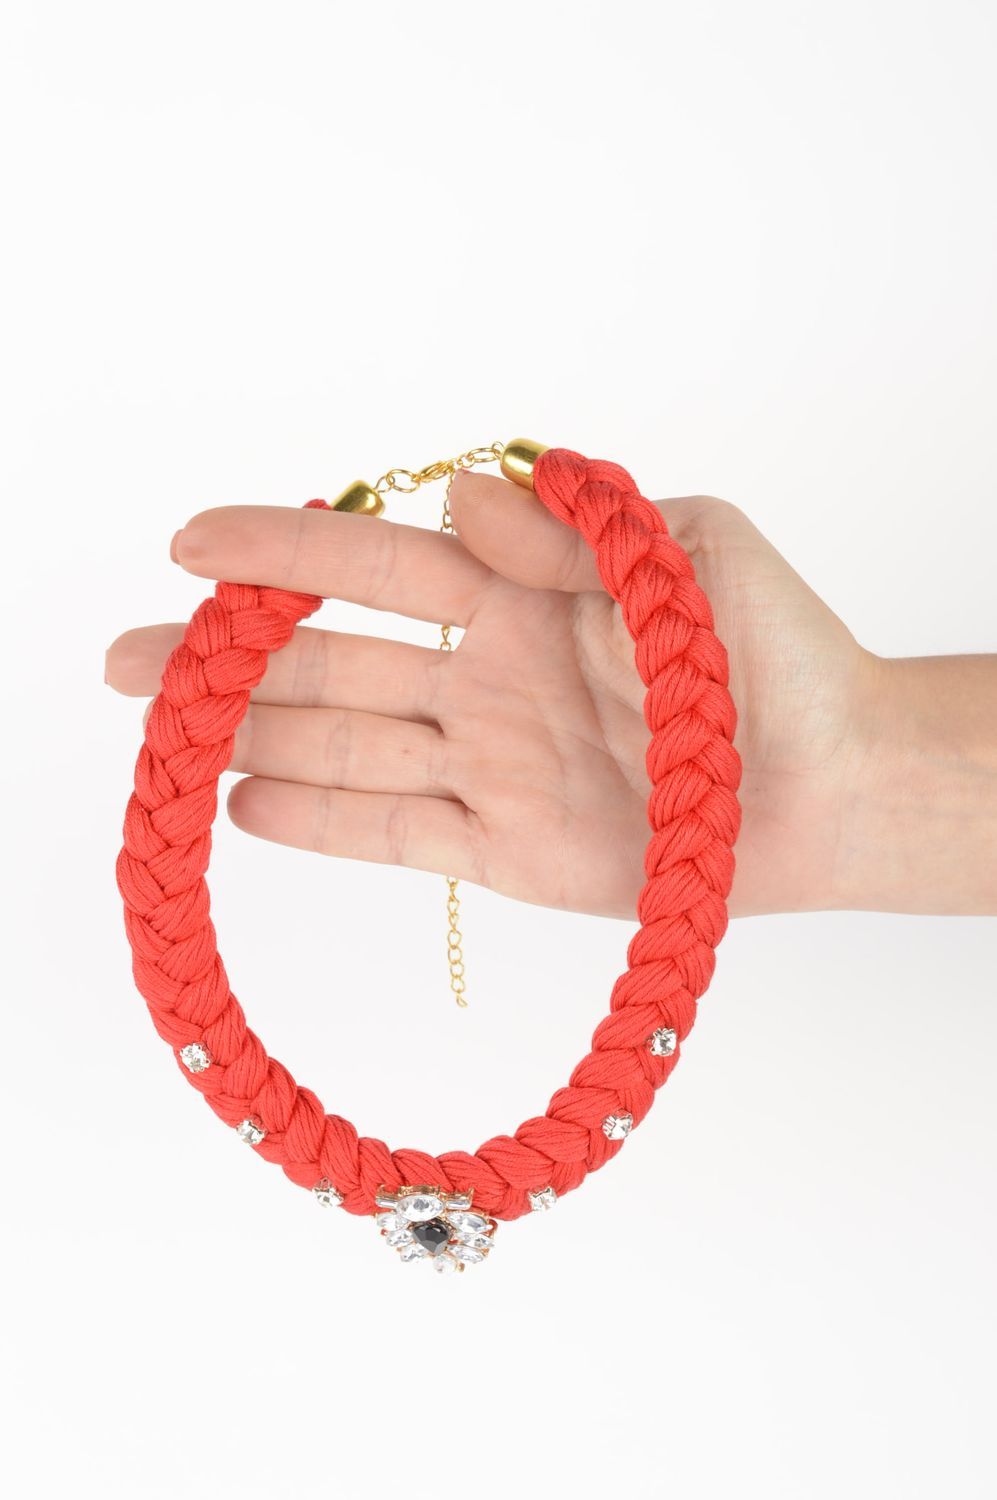 Handmade necklace fashion jewelry unusual accessory designer necklace gift ideas photo 1